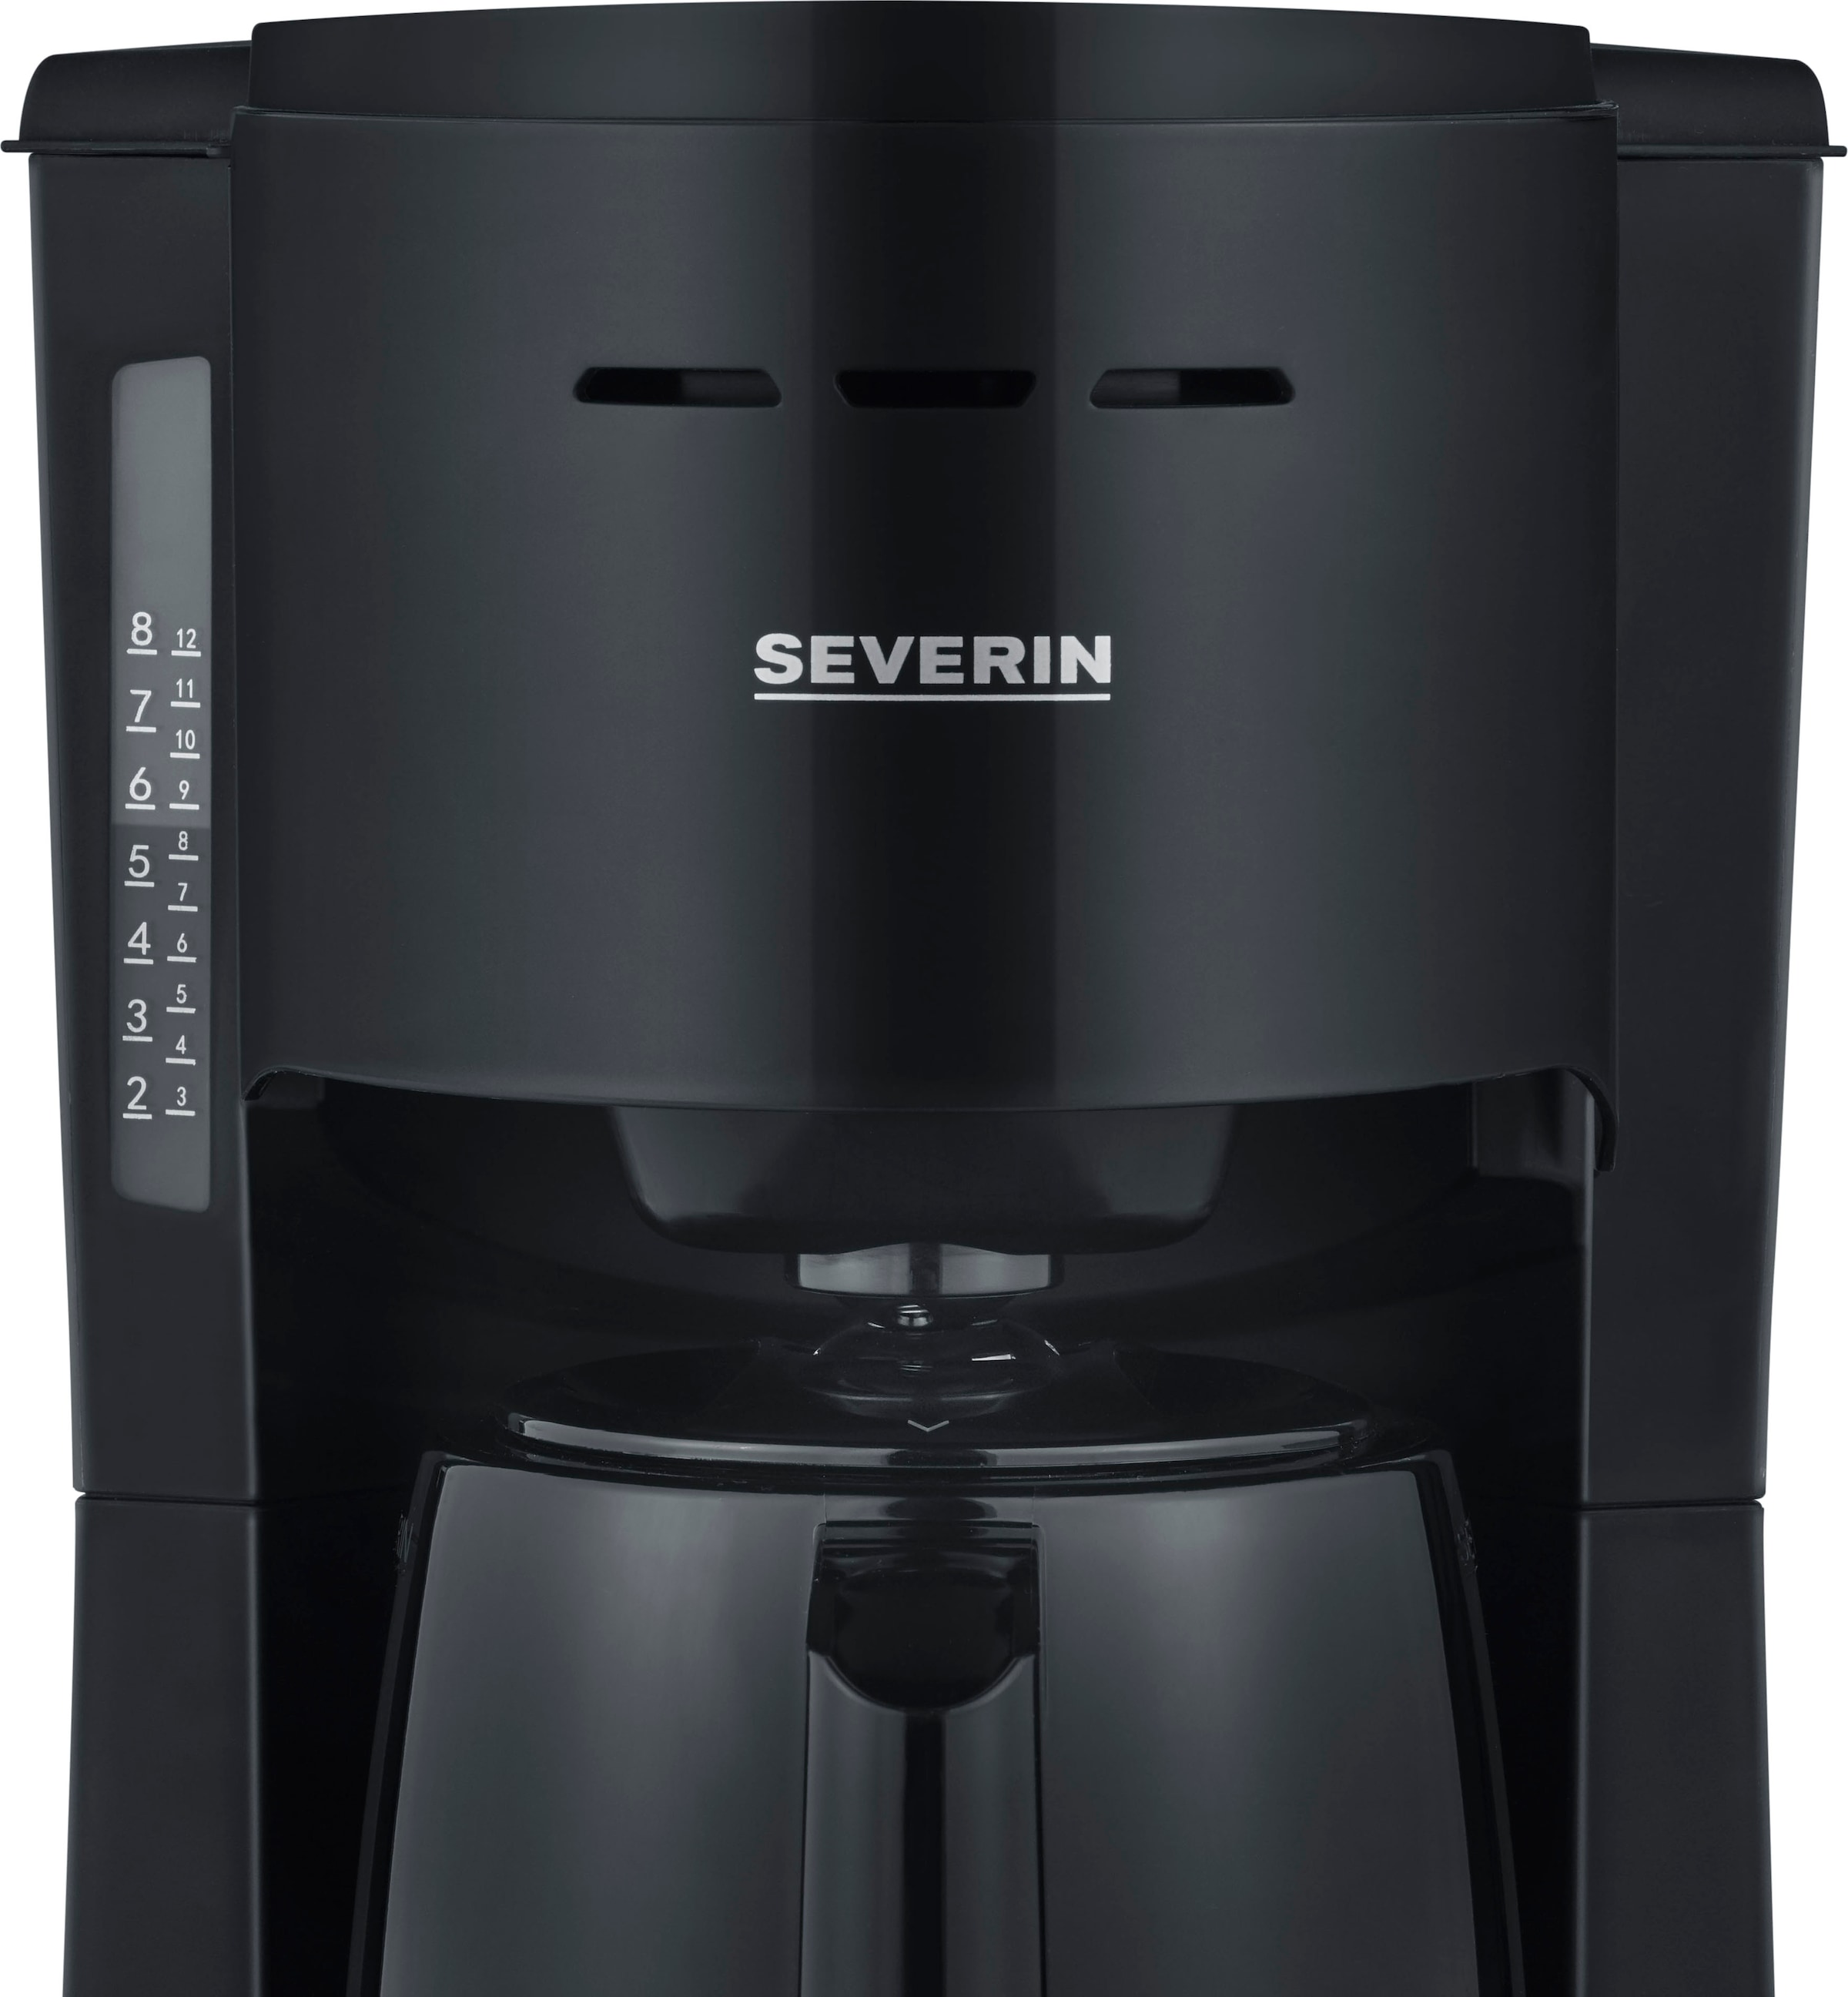 Severin Filterkaffeemaschine »KA 9306«, 1 l Kaffeekanne, Papierfilter, 1x4, Thermokanne mit Durchbrühdeckel